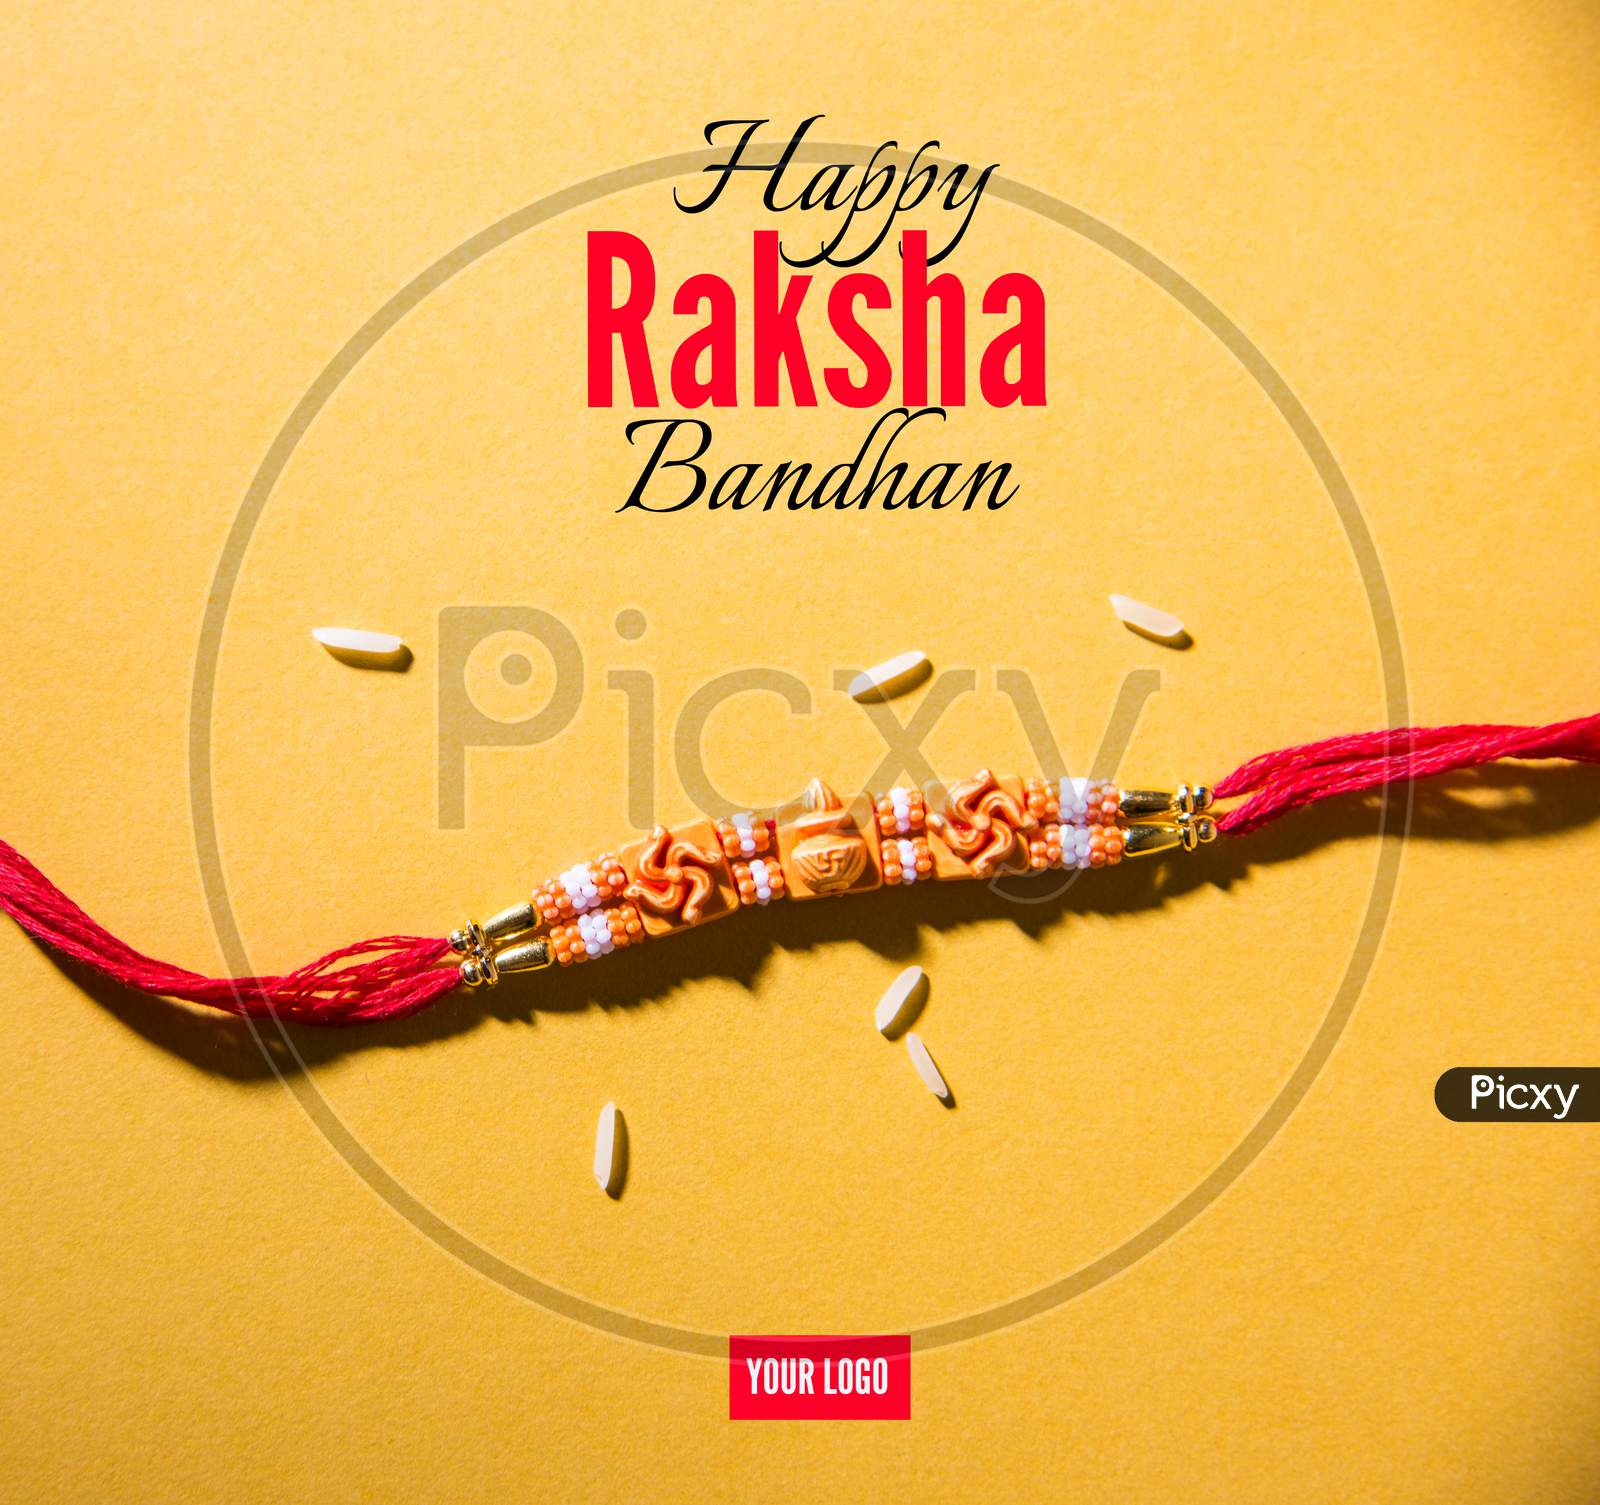 Happy Raksha Bandhan /Rakhi Greeting Card using Designer thread, Diya, Pooja Thali, Gift box, Indian Paper Currency notes and sw